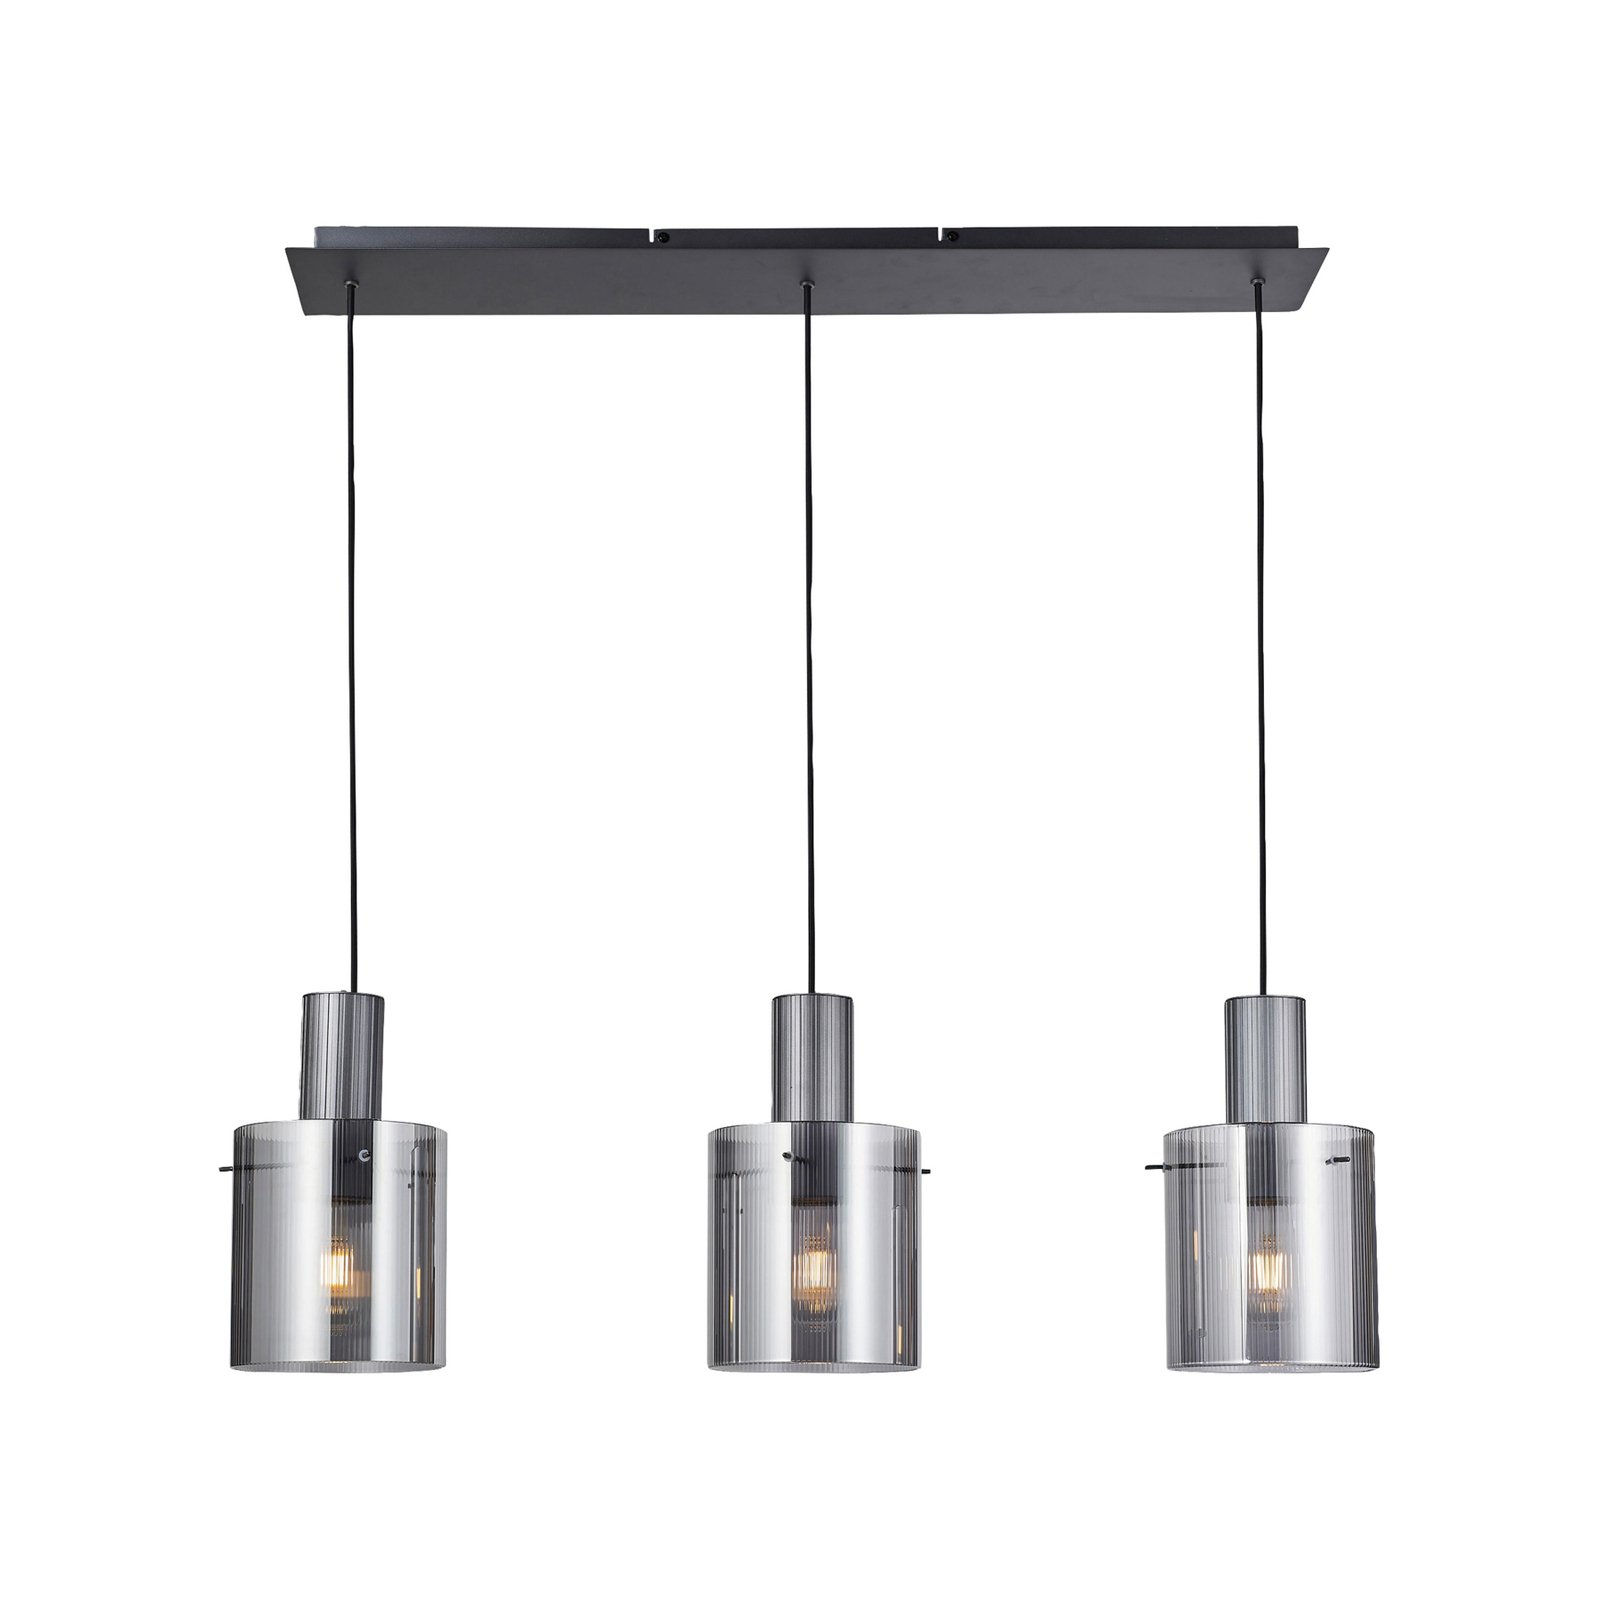 Riffelini hanging light, length 98 cm, smoky grey/black, 3-bulb.